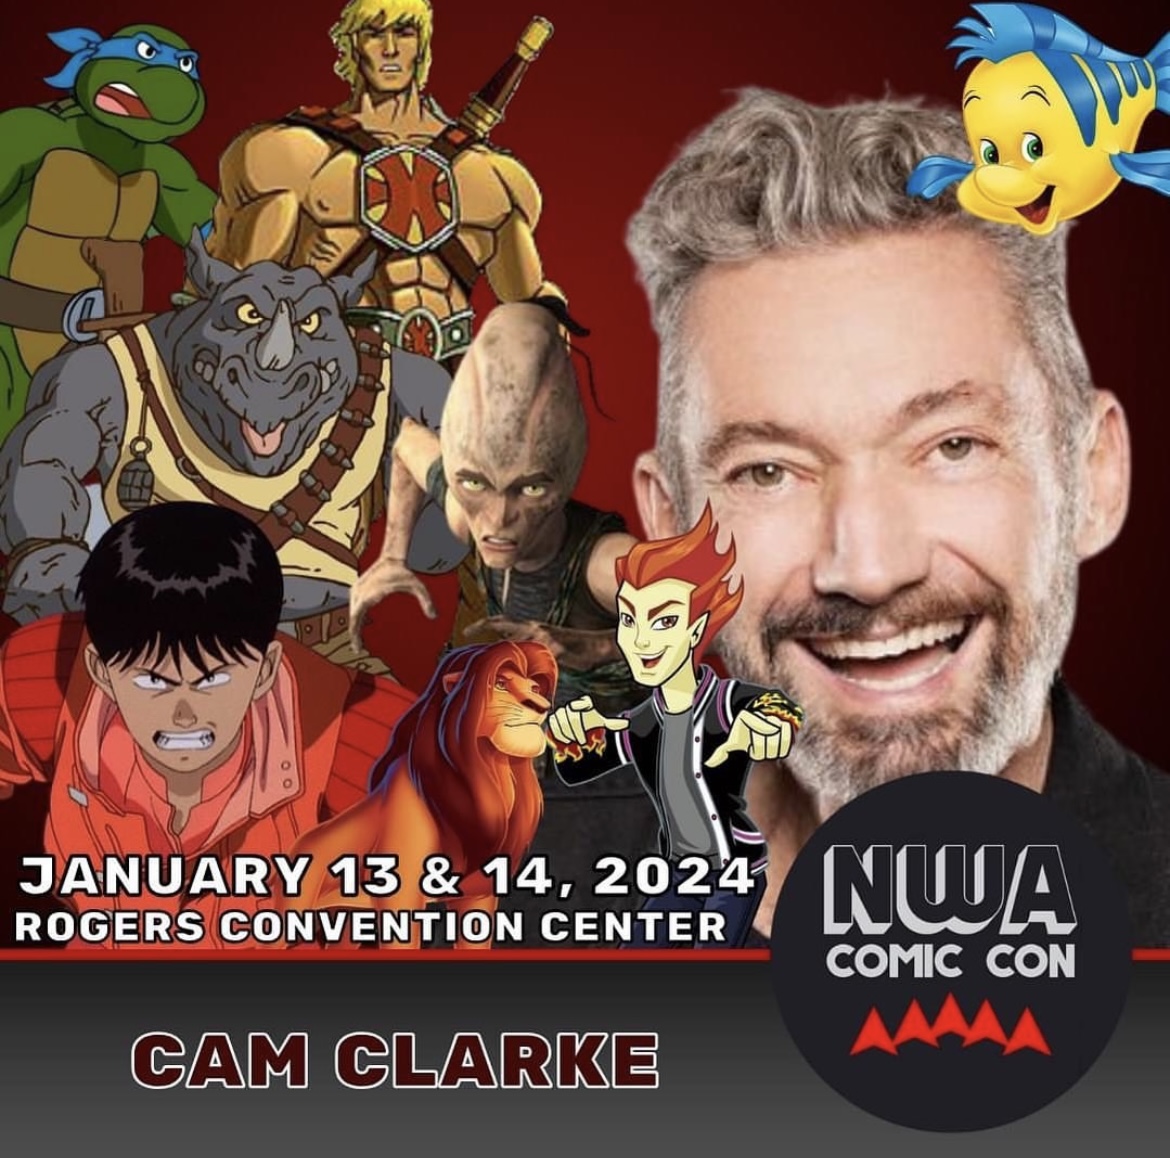 This weekend I'll be with the Teenage Mutant Ninja Turtles in Arkansas at NWA Comic Convention. Looking forward to meeting all of you! #LiquidSnake #MGS #MetalGear #Robotech #Akira #HeMan #TMNT #TeenageMutantNinjaTurtles #Leonardo nwacomiccon.com/guests?pgid=l4…